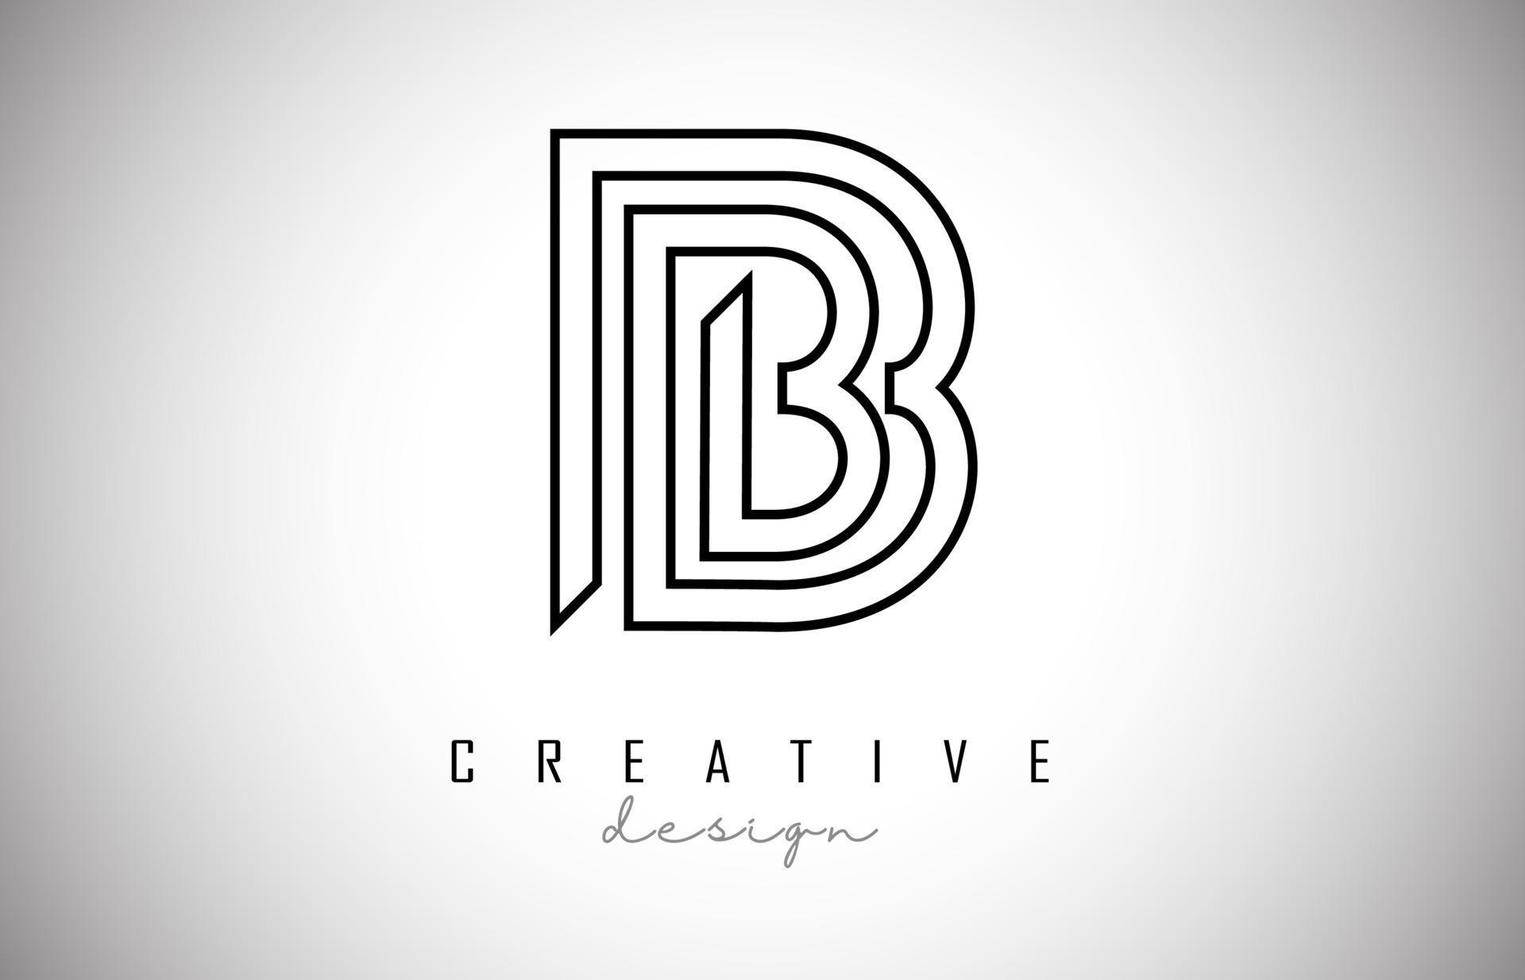 B Letter Logo Monogram Vector Design. Creative B Letter Icon with Black Lines